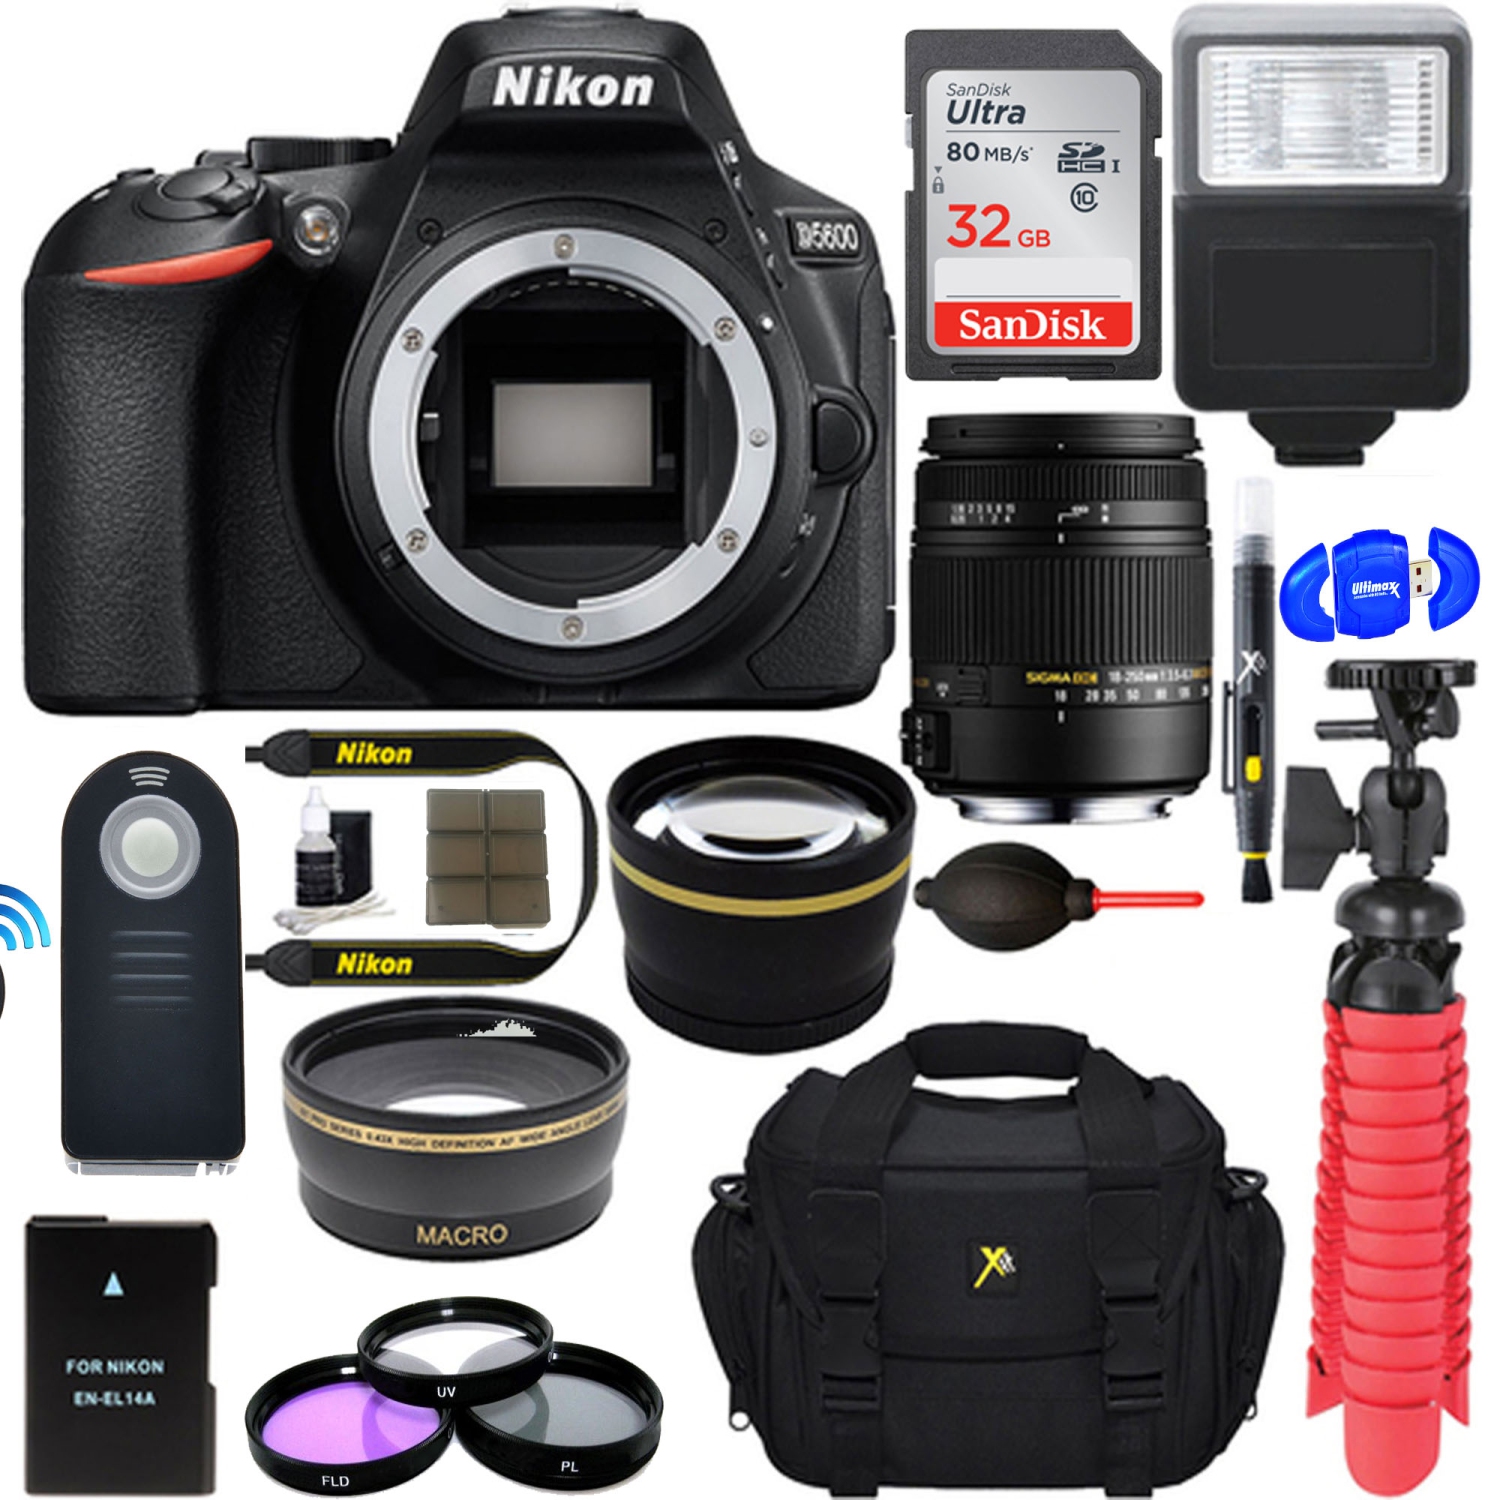 Nikon D5600 24.2 MP Digital SLR Camera + Sigma 18-250mm Macro Lens & Accessory Bundle - US Version w/ Seller Warranty